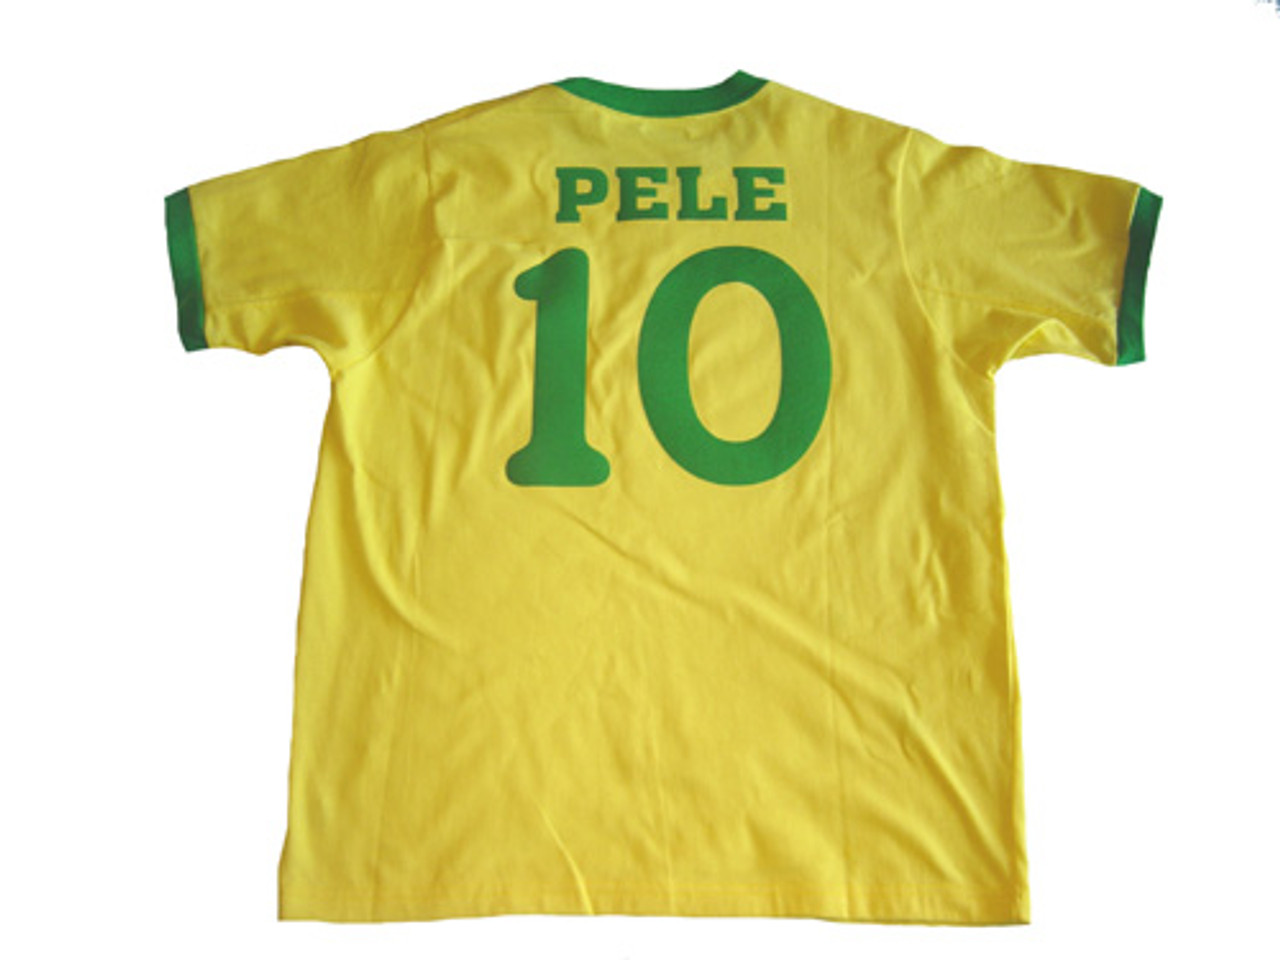 jersey number of pele